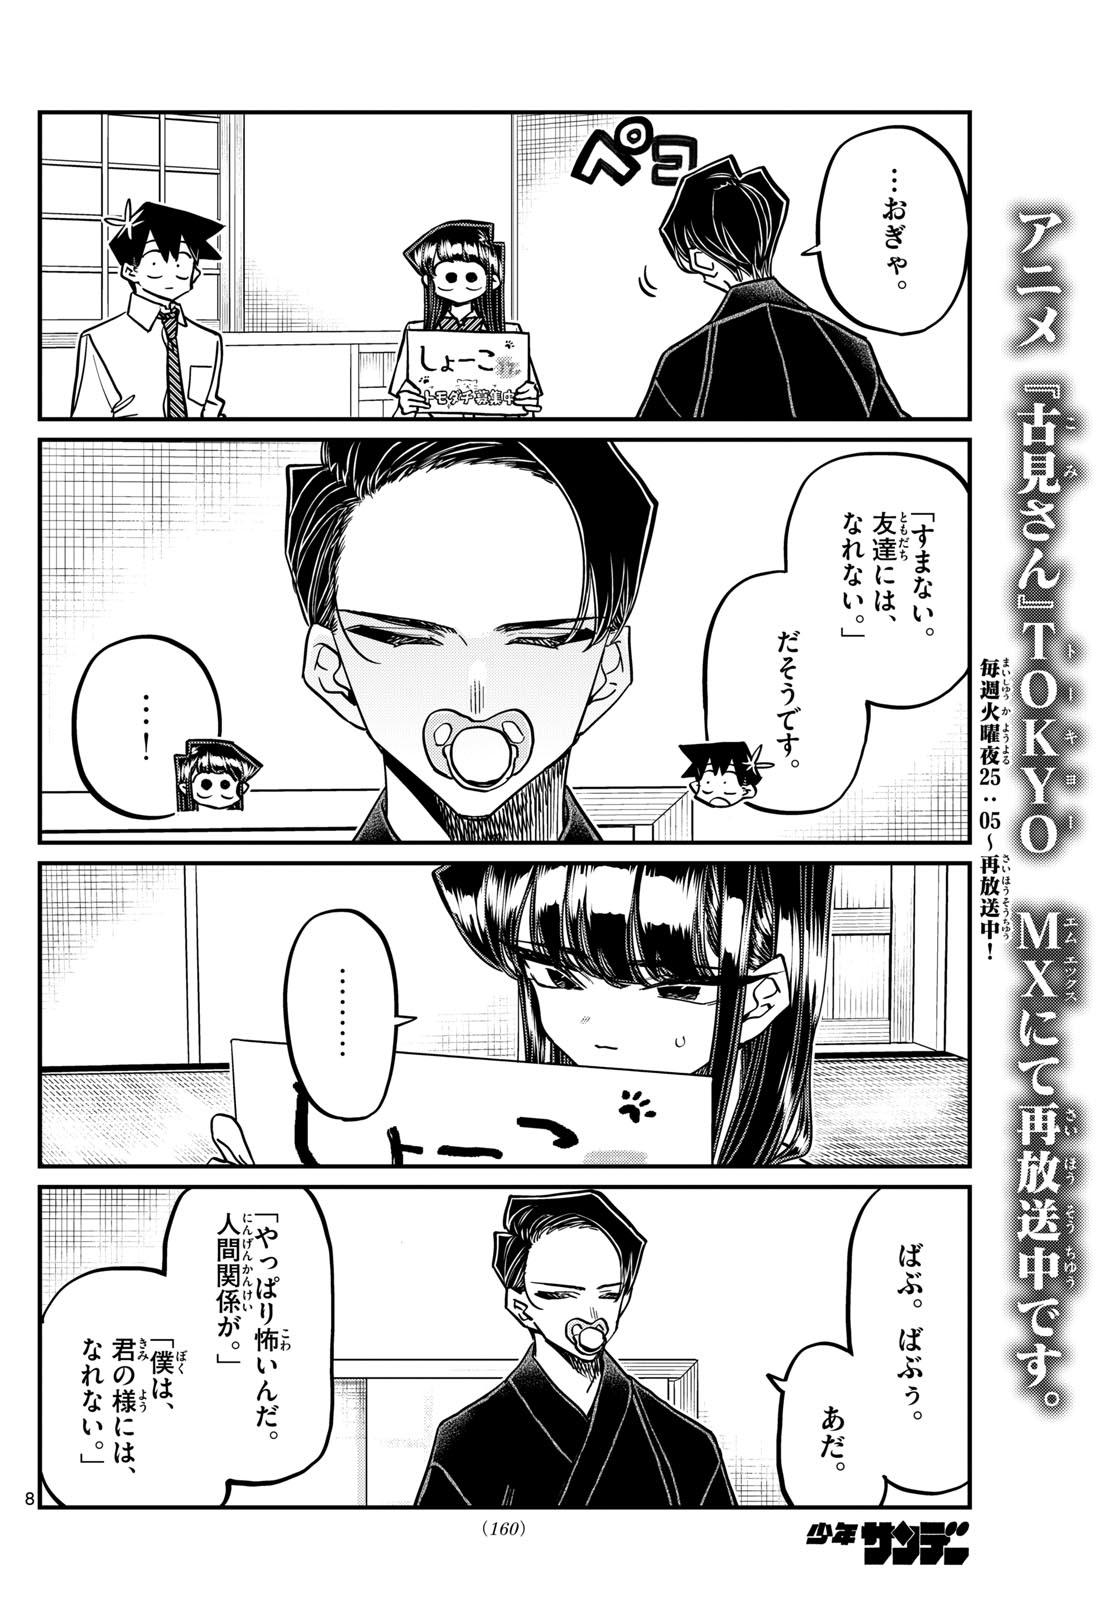 El bebe de Shouko y Tadano ! Una familia de 4 ??? Komi-san Manga 418 